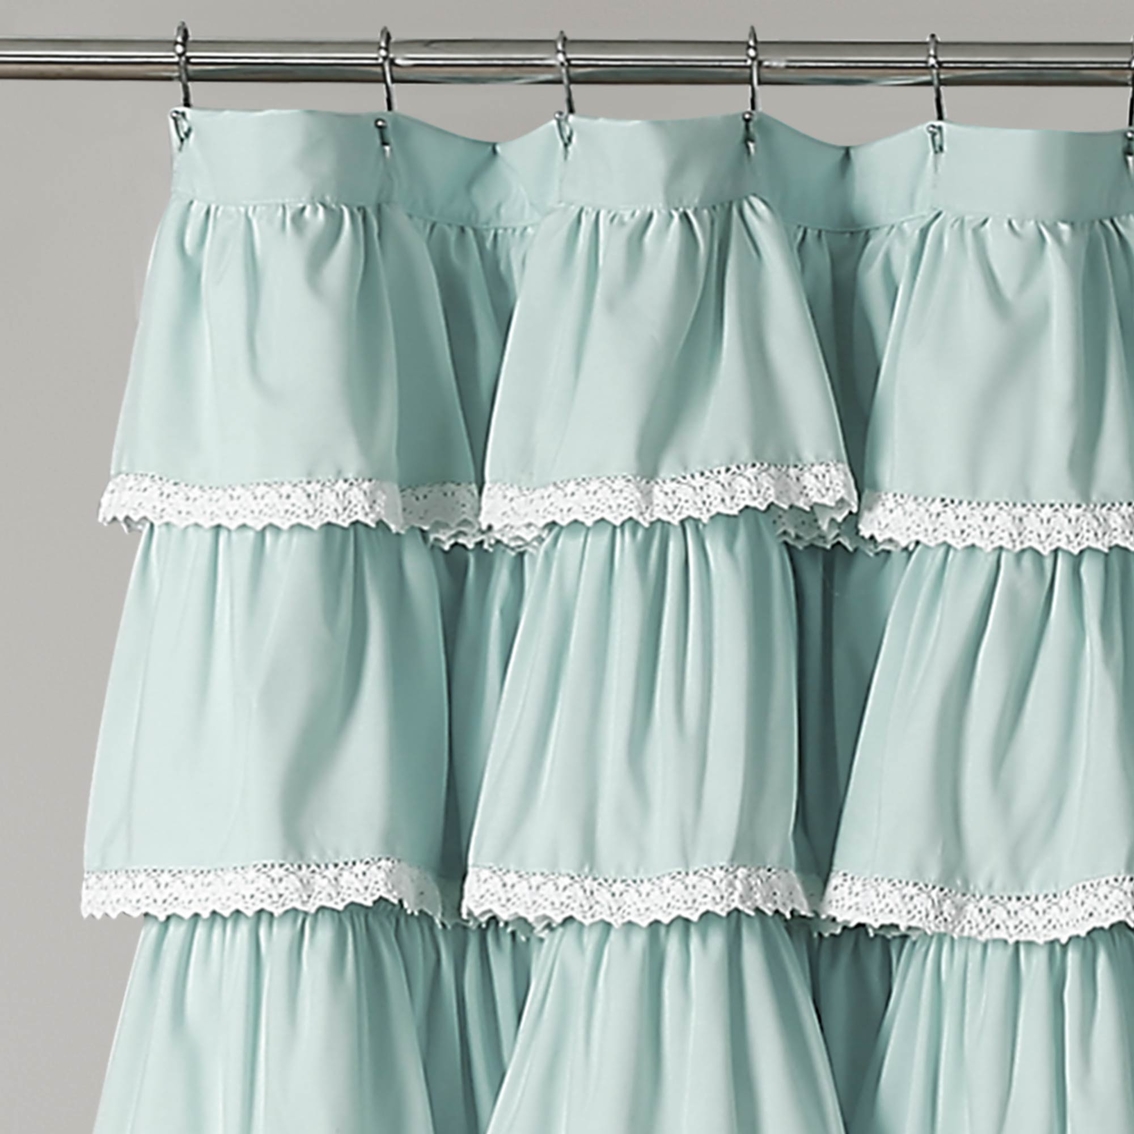 Lush Decor Lace Ruffle Single 72 x 72 in. Shower Curtain - Image 2 of 3